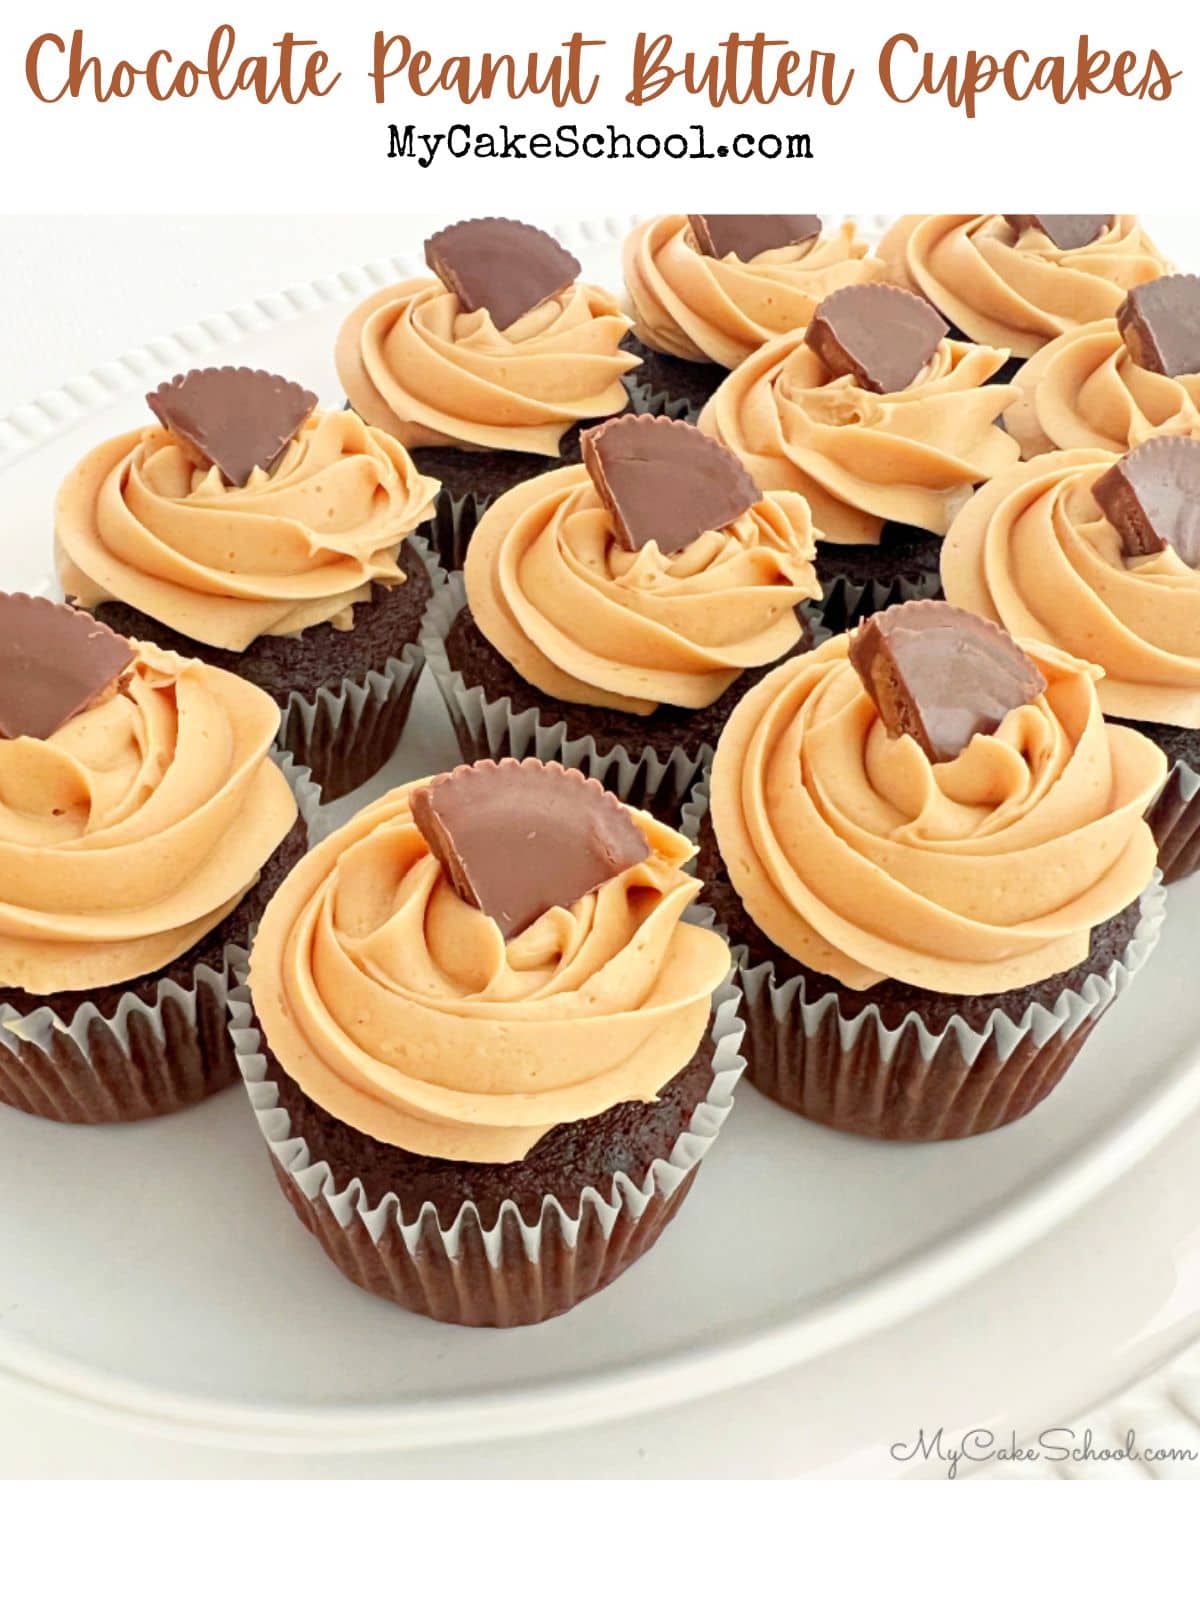 https://www.mycakeschool.com/images/2023/04/Chocolate-Peanut-Butter-Cupcakes-photo-.jpg